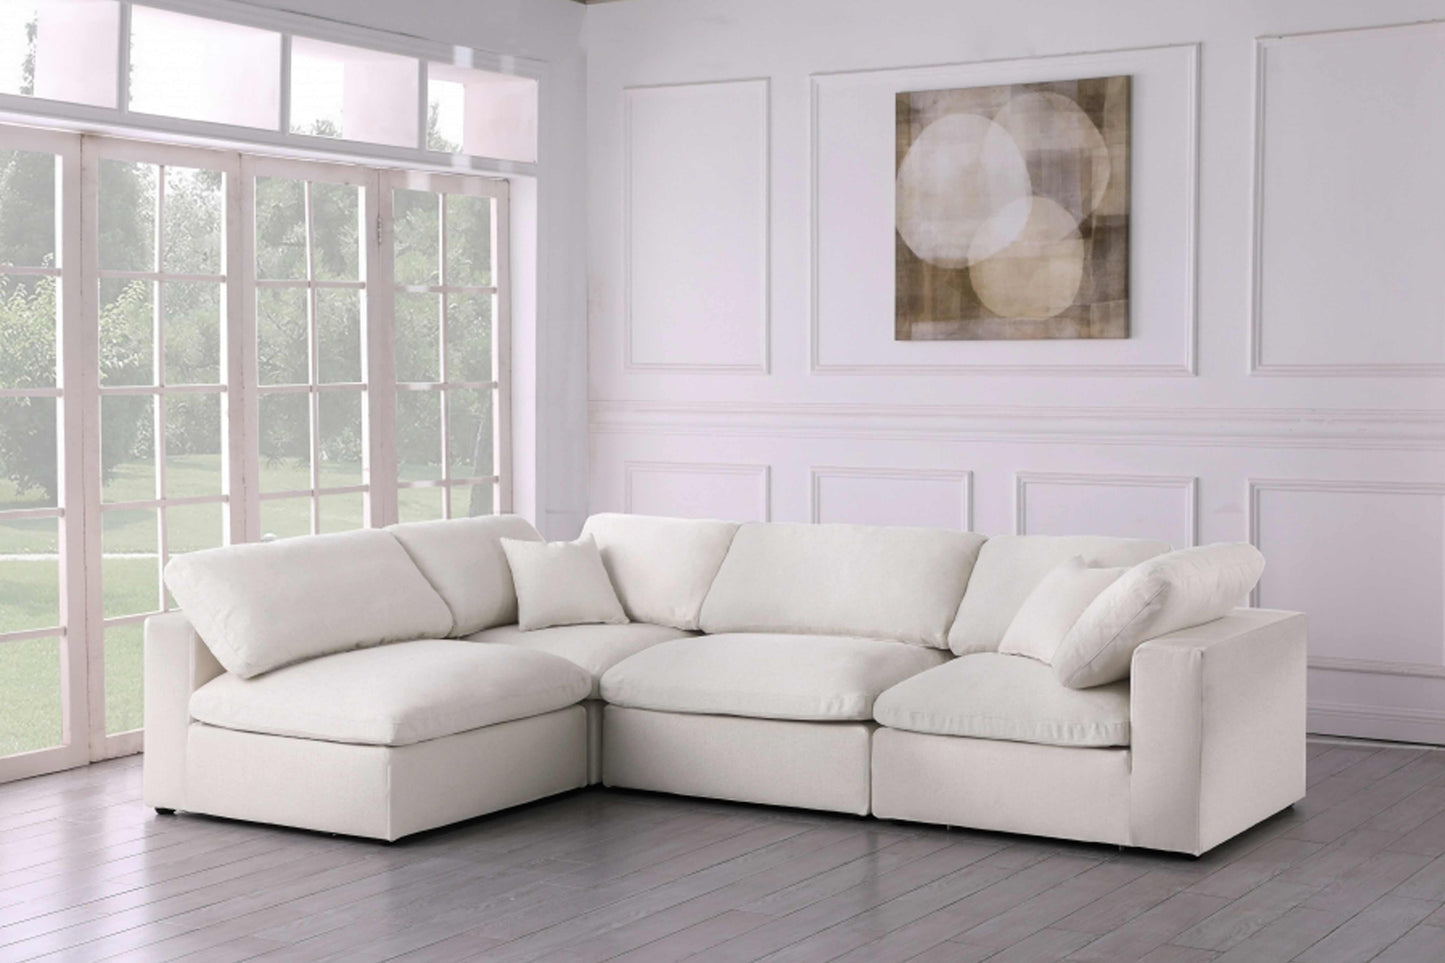 Serene Linen Deluxe Modular Down Filled Cloud-Like Comfort Overstuffed Sectional SKU: 601-Sec4B - Venini Furniture 